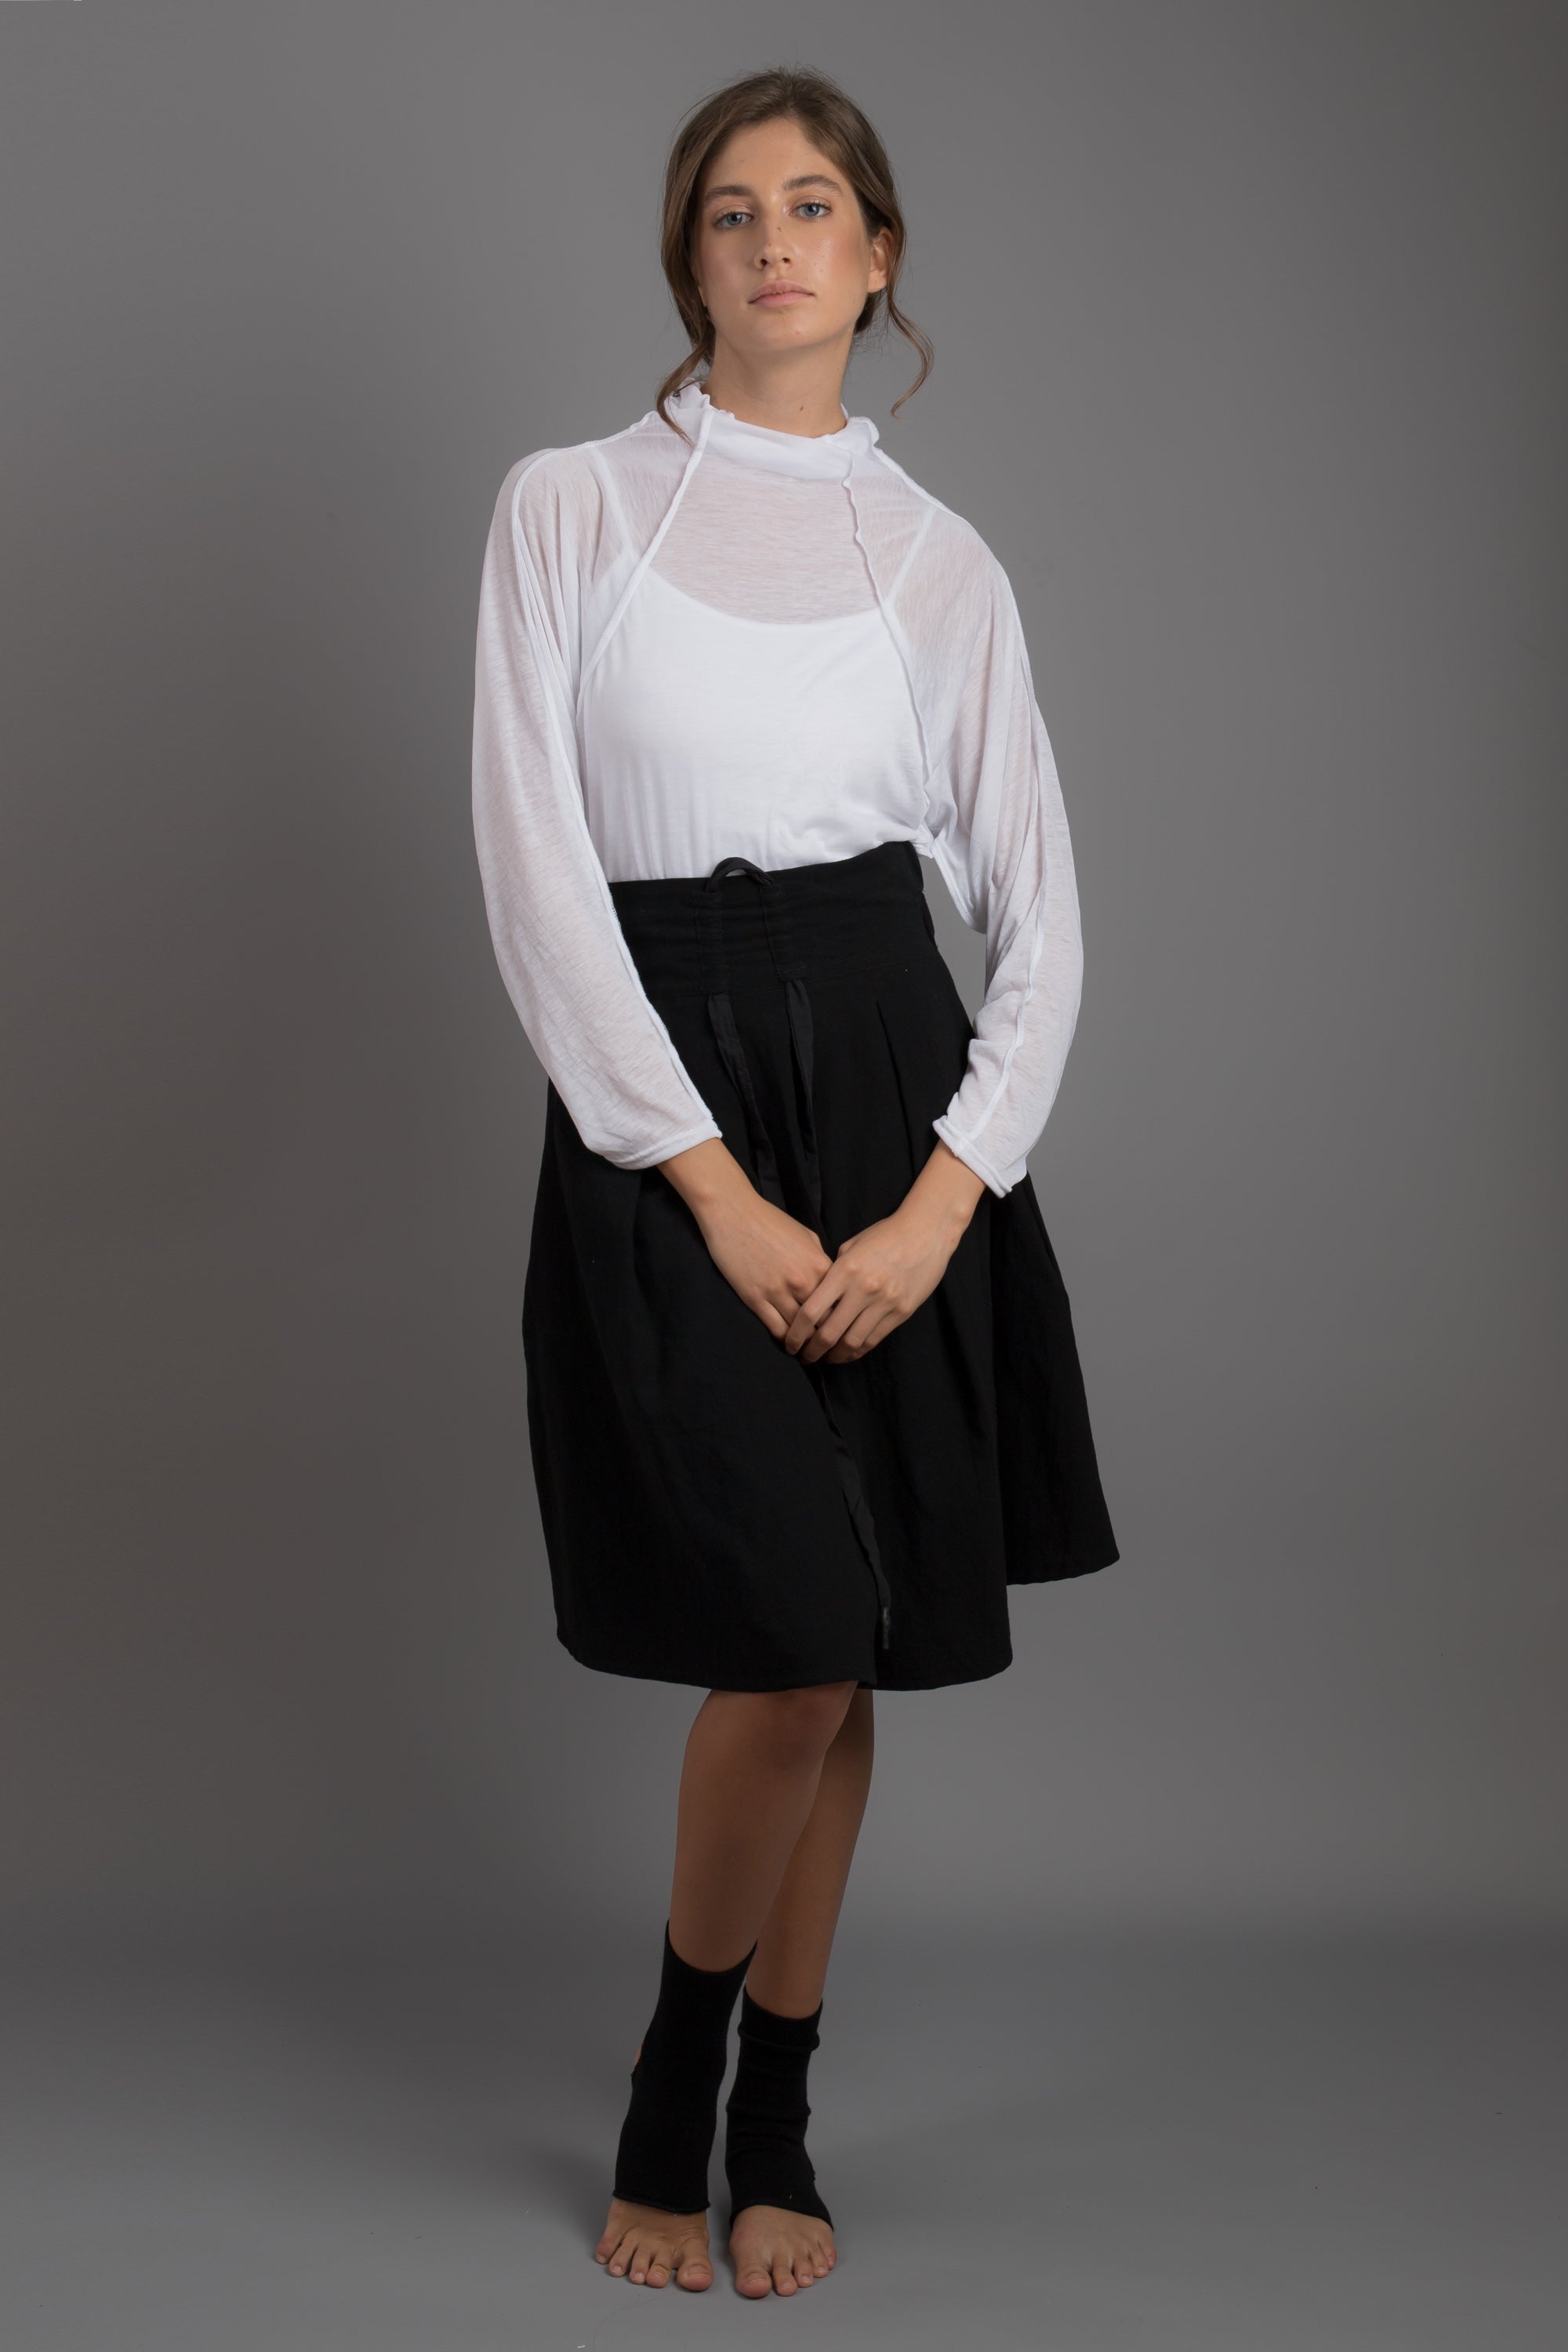 Black High Waist Cotton Skirt with Draw String Black Pleated Skirt Midi Skirt